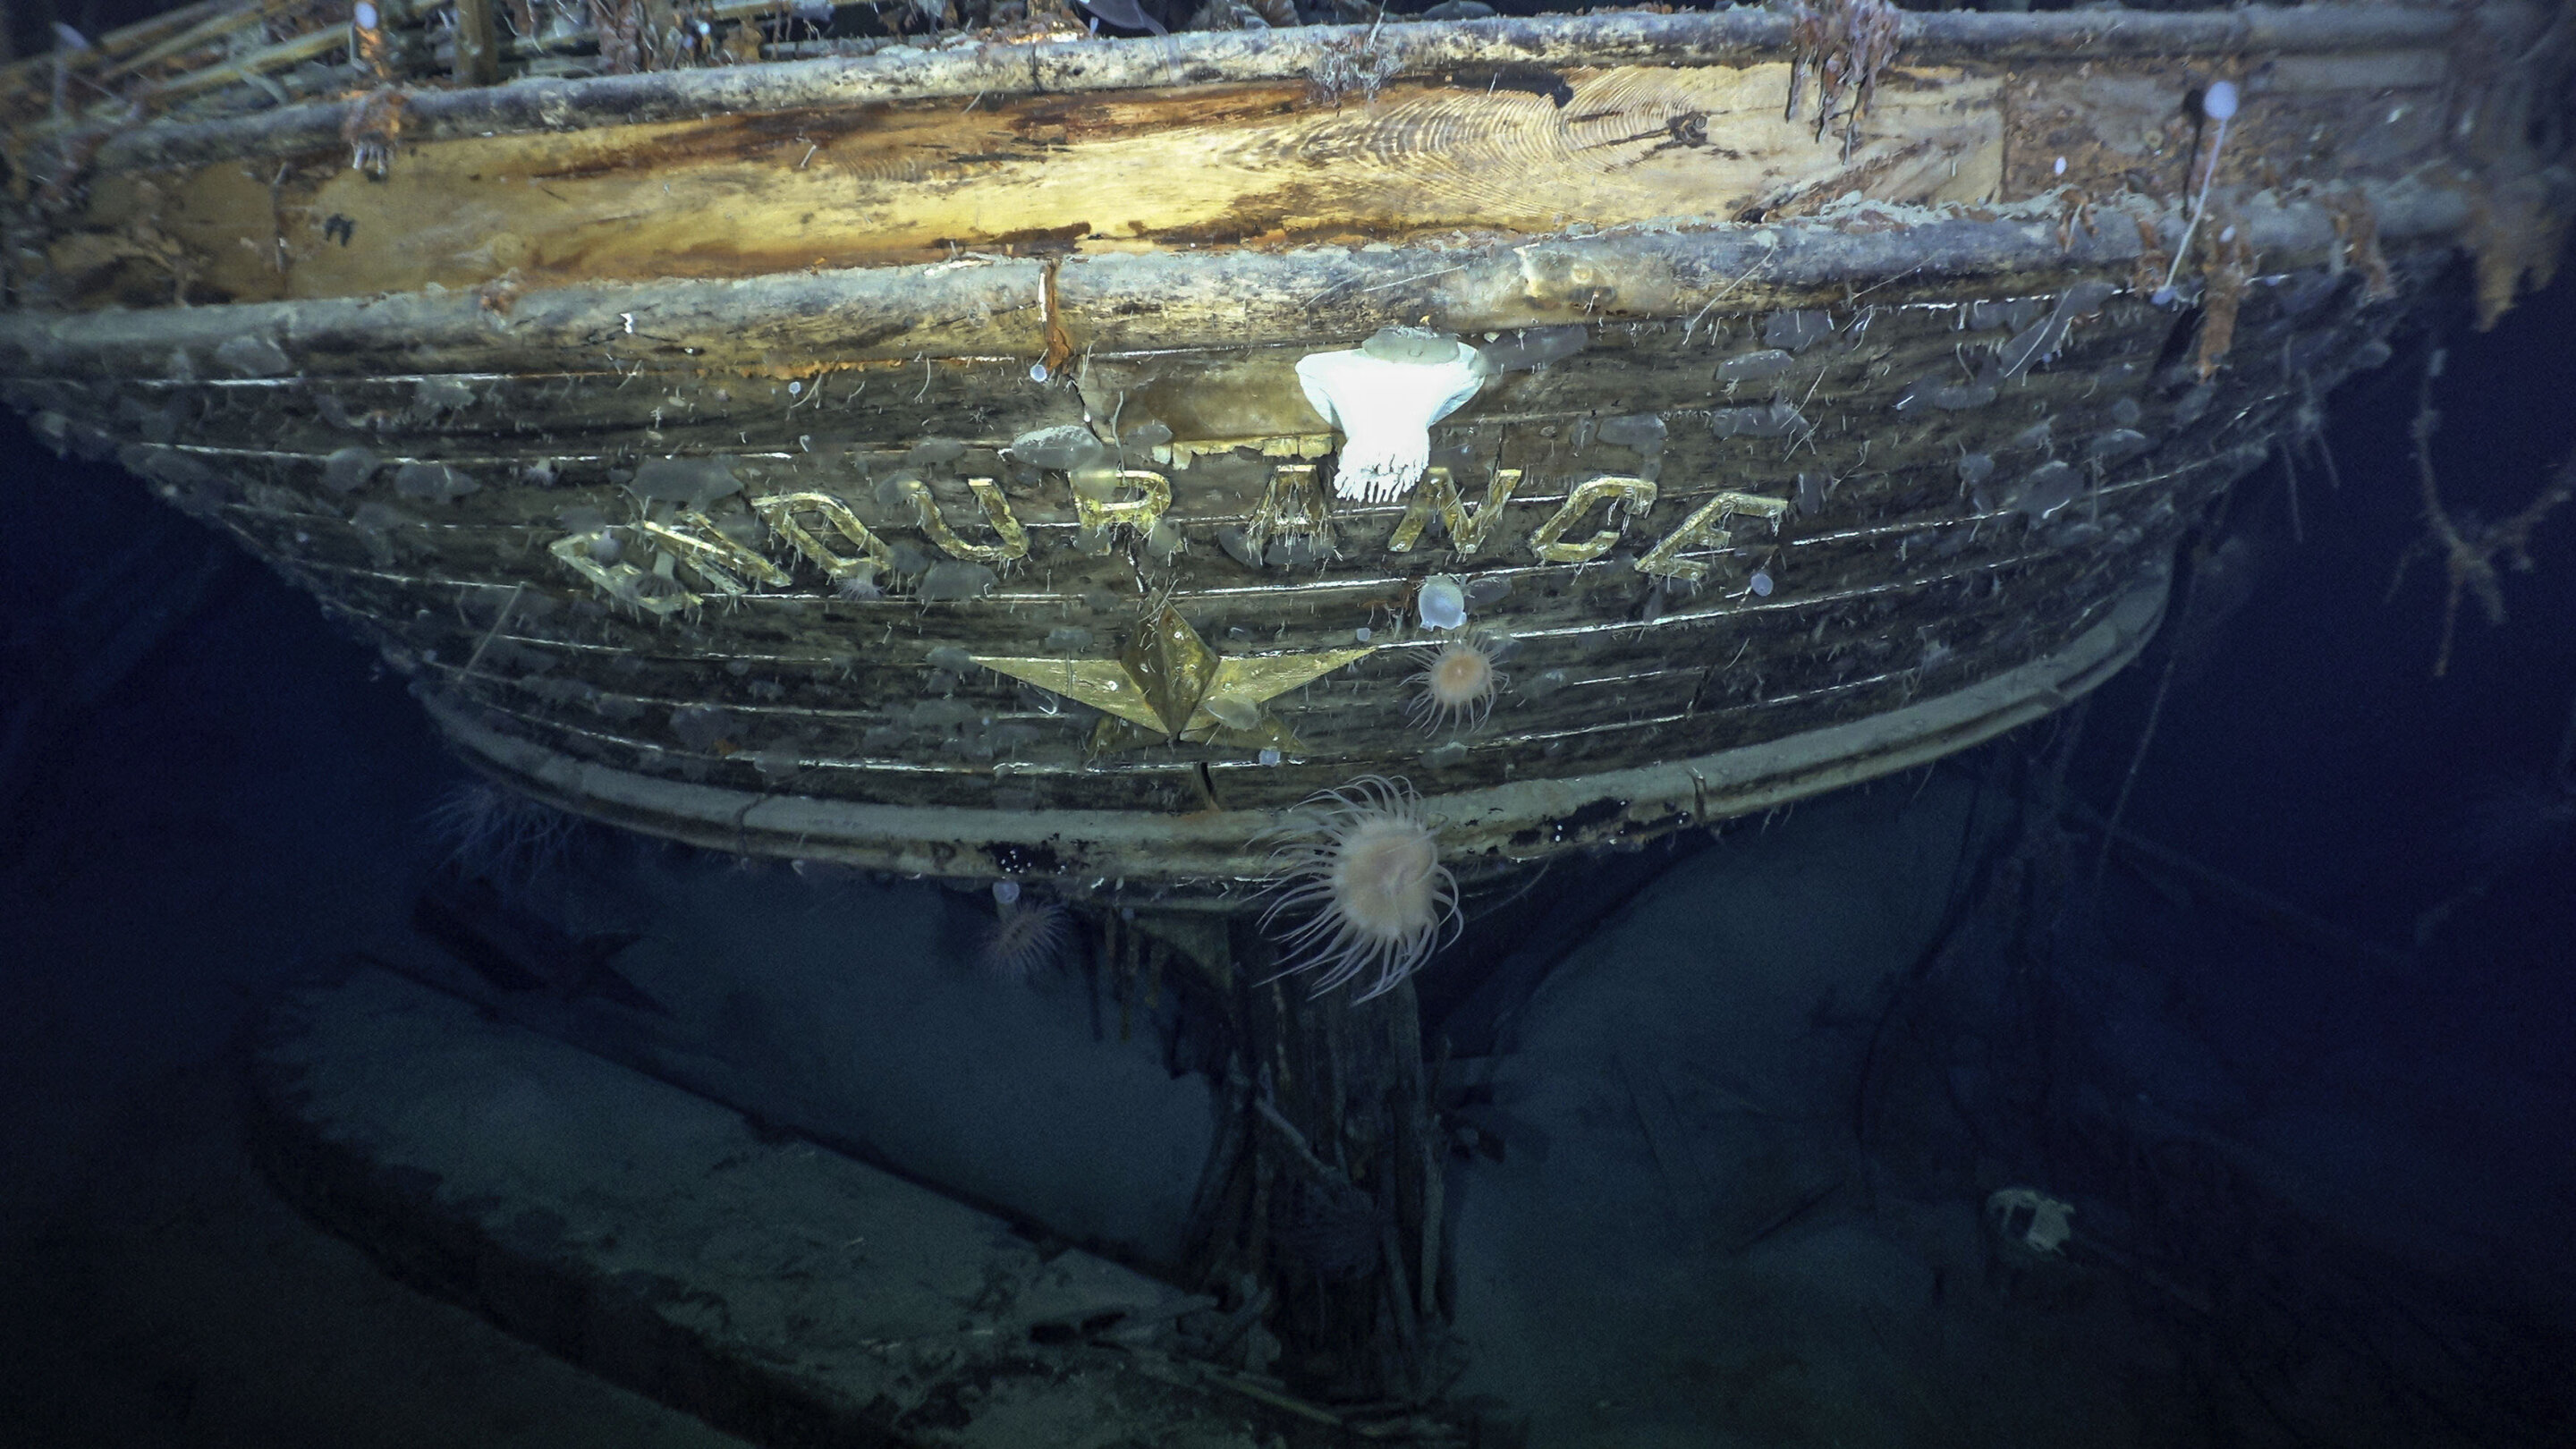 #Explorer Shackleton’s ship found after a century